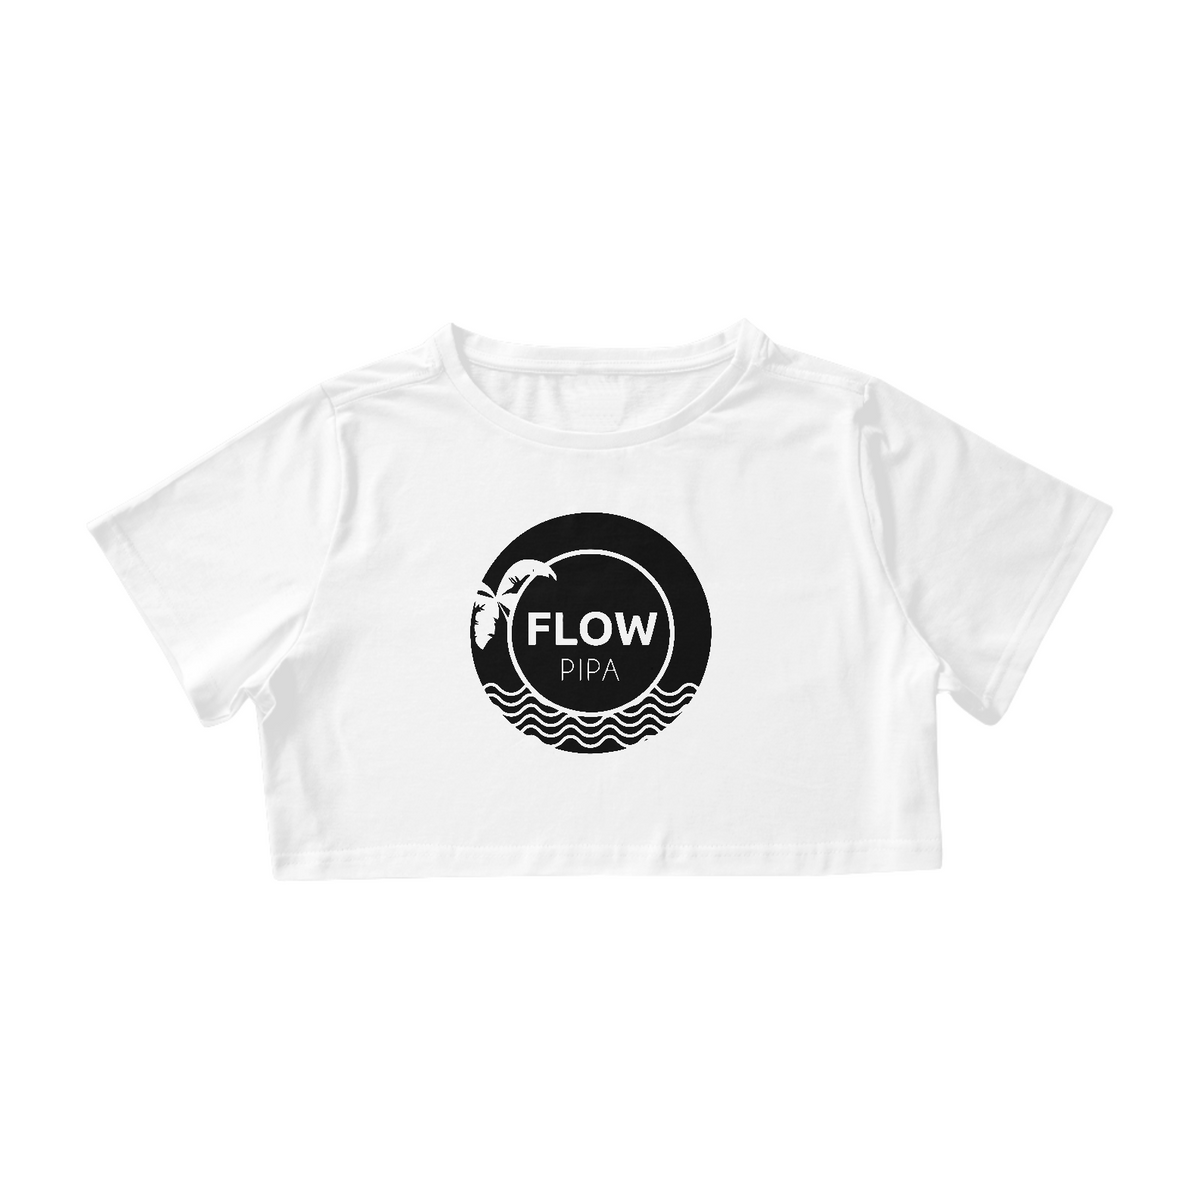 Nome do produto: Flow Pipa - Cropped #2